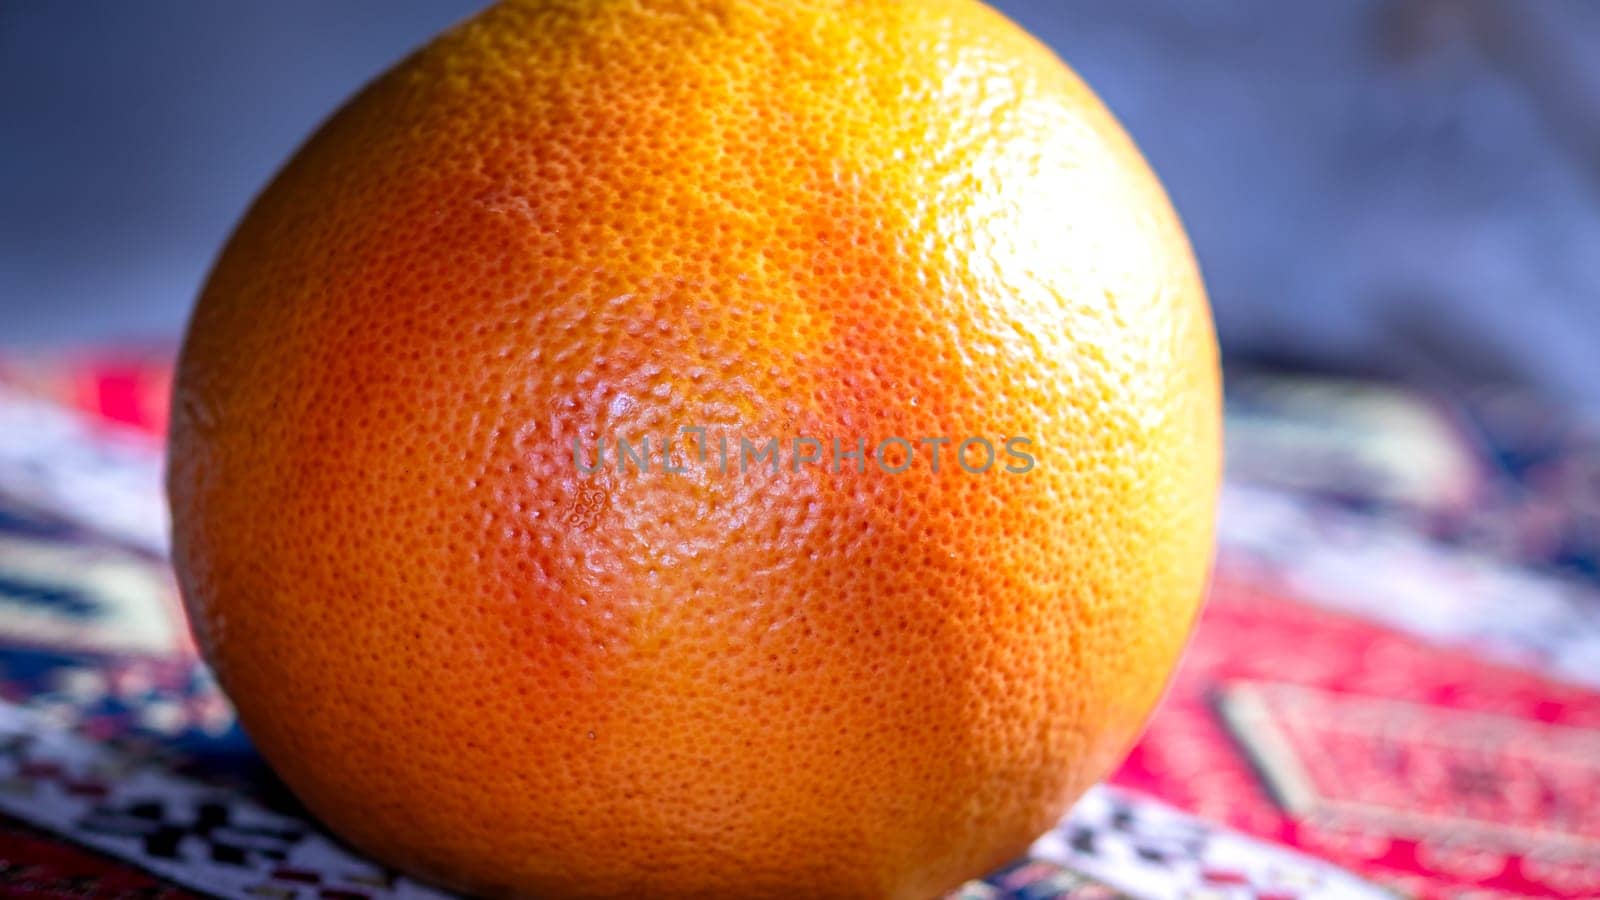 Orange fruit on the table. Healthy fruits by vladispas